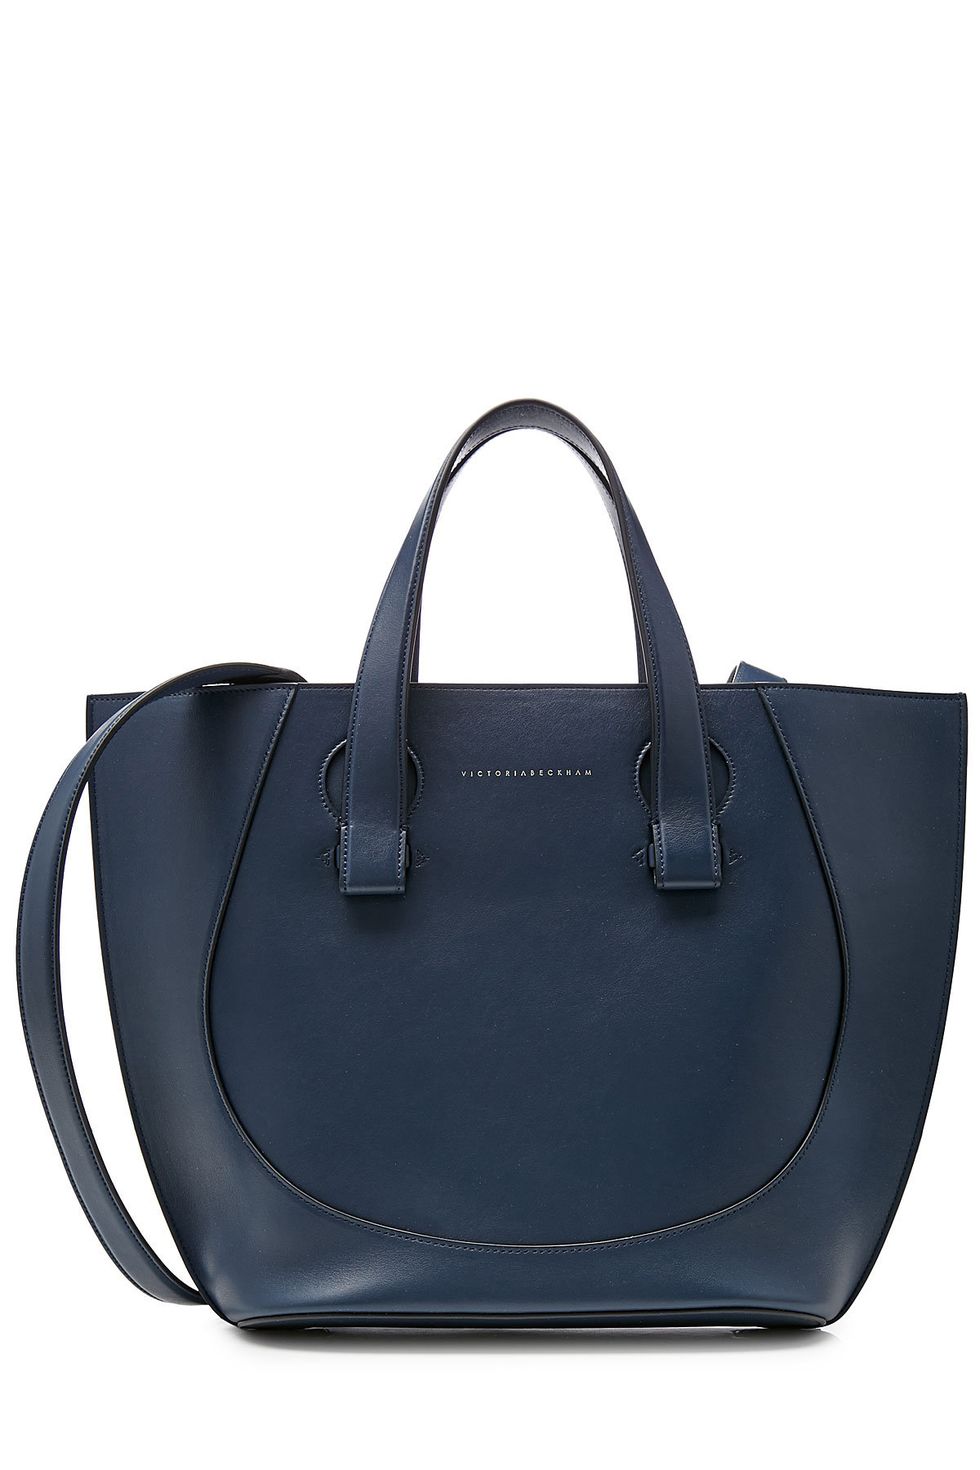 Handbag, Bag, Black, Leather, Product, Fashion accessory, Shoulder bag, Tote bag, Satchel, Luggage and bags, 